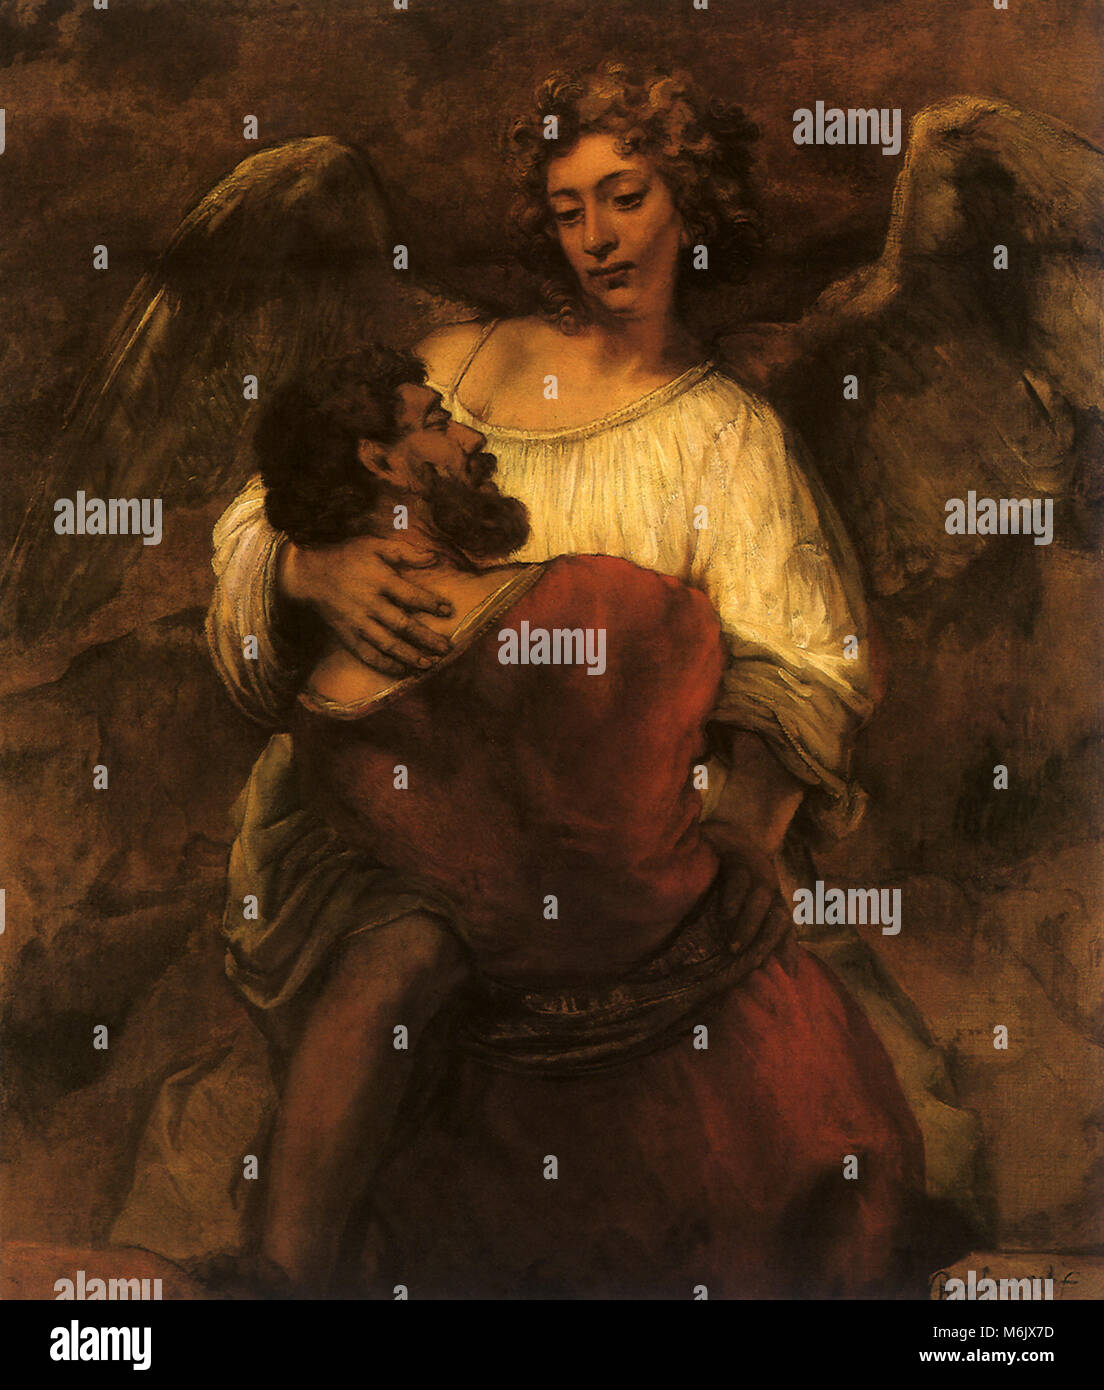 Jacob Wrestling with the Angel, Rembrandt, Harmensz van Rijn, 1659. Stock Photo